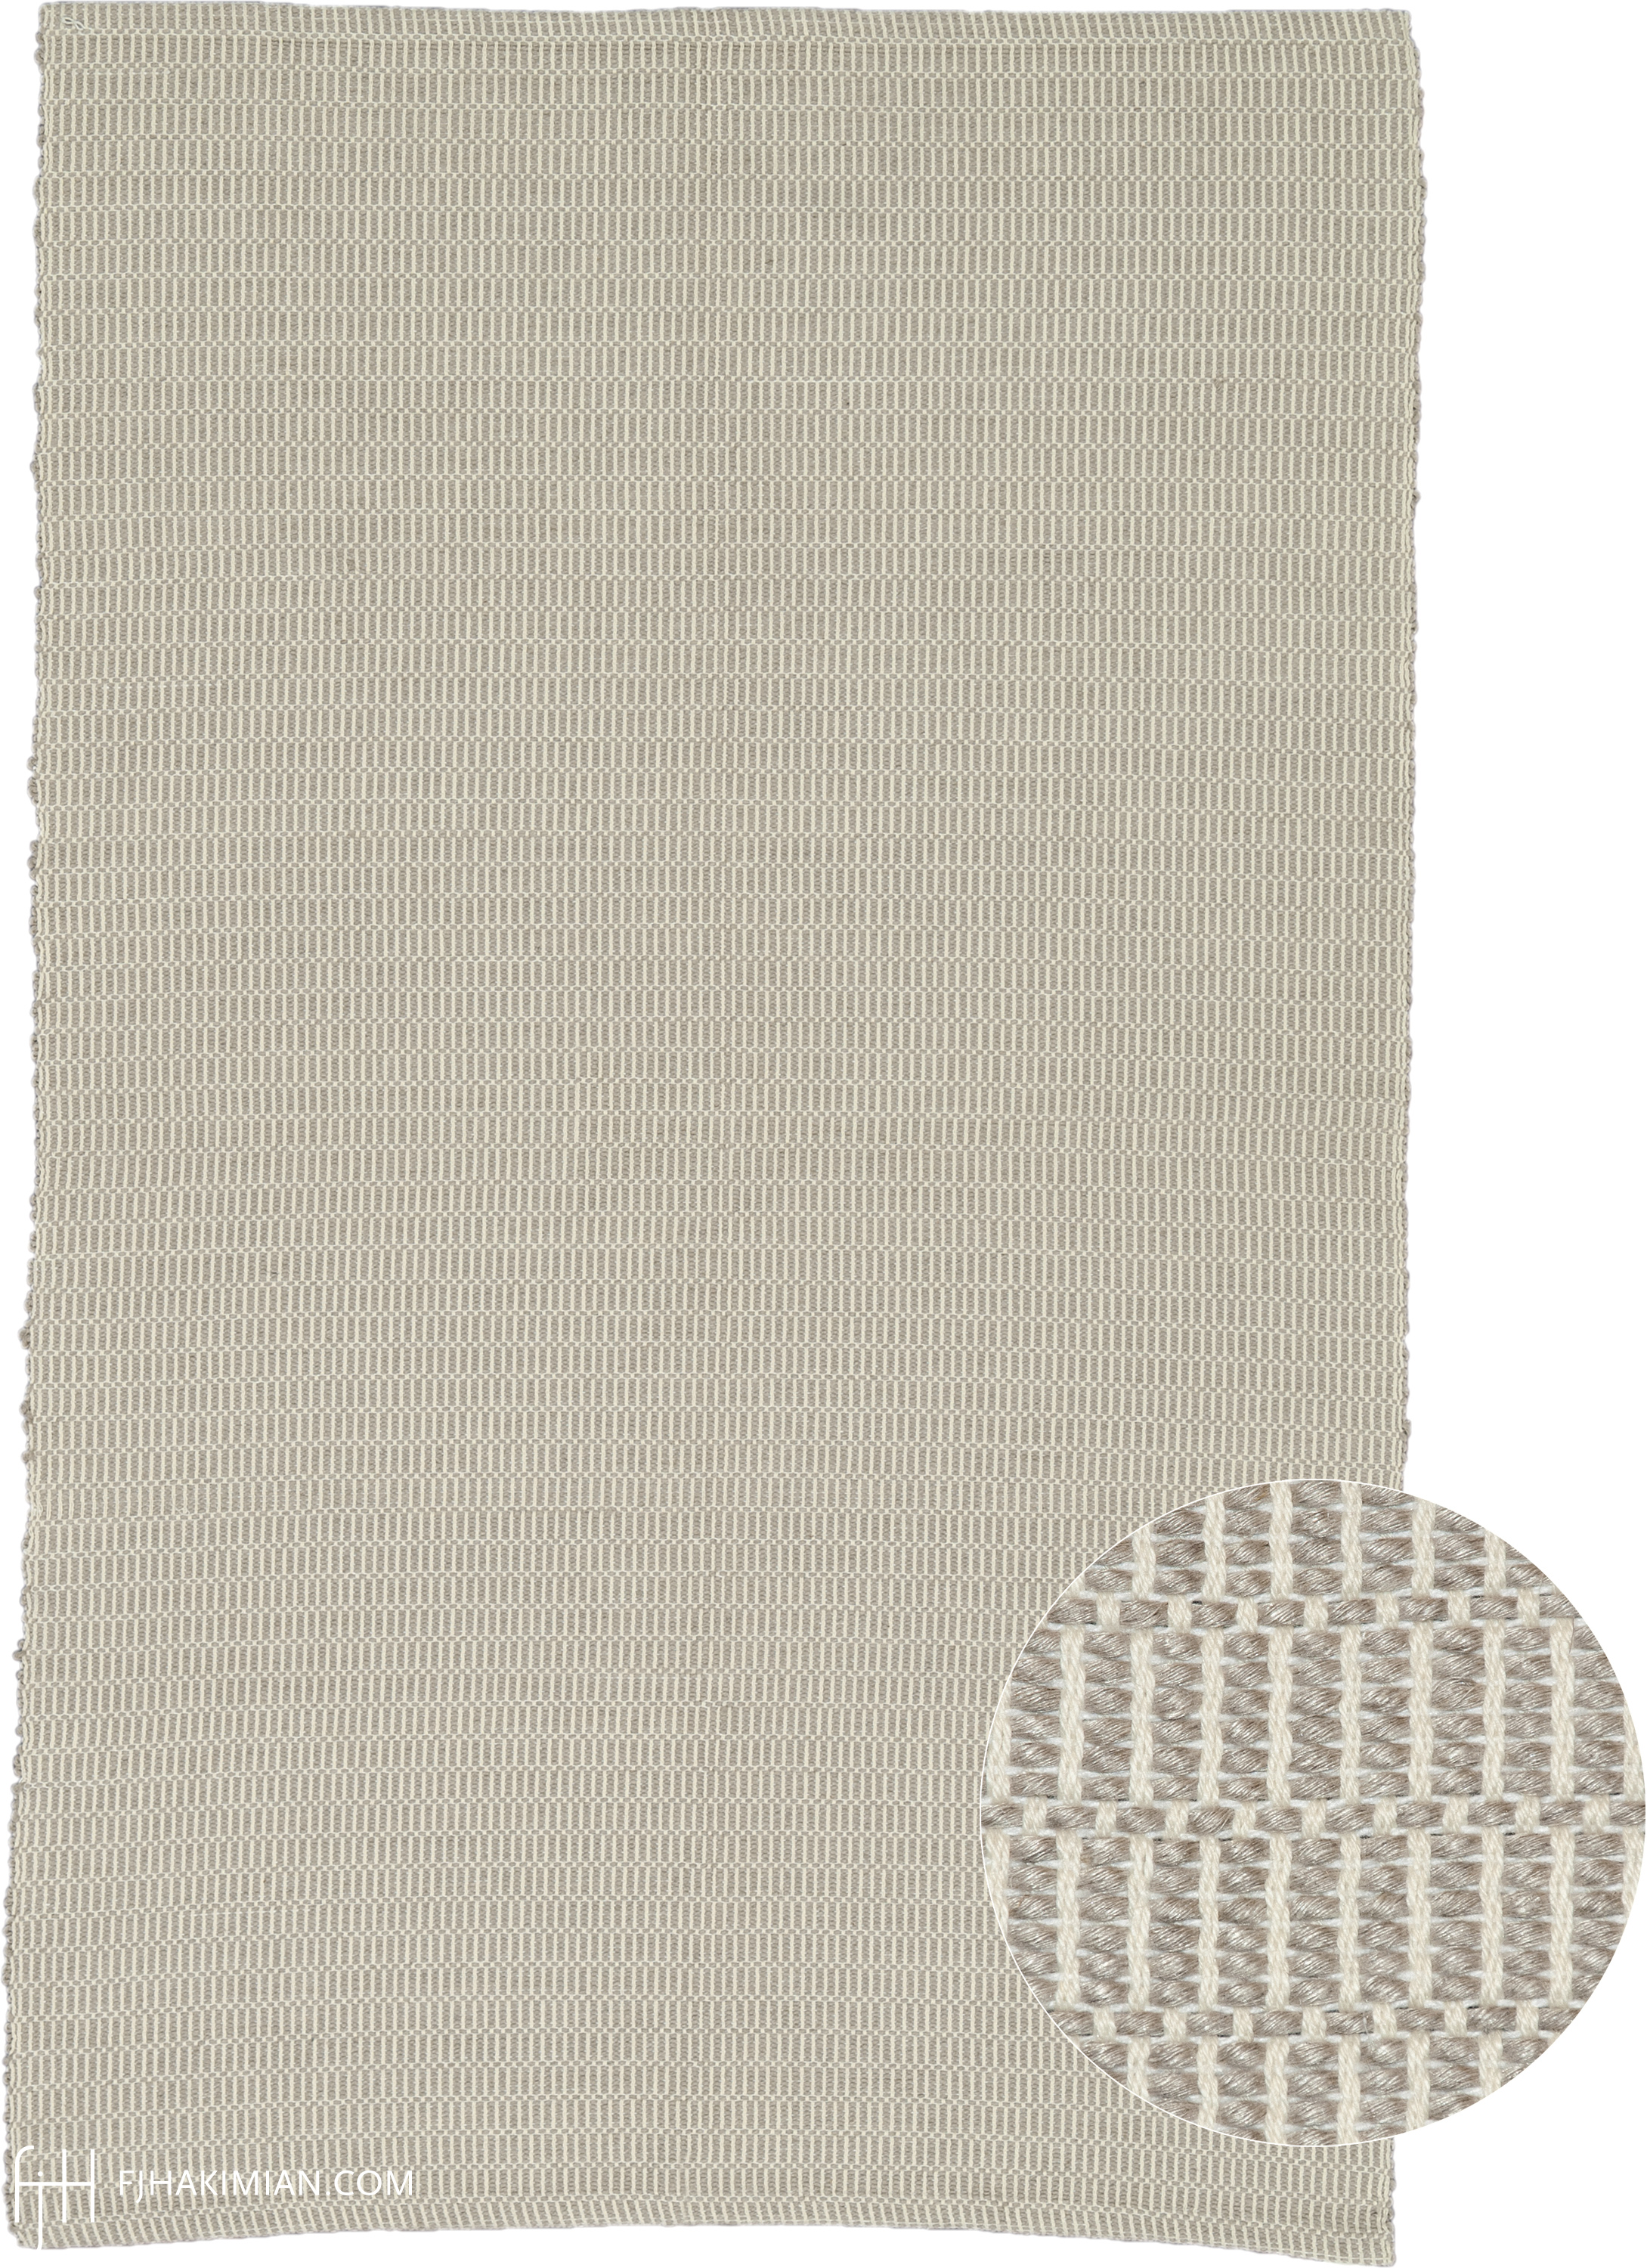 25224 | Custom Sardinian Carpet | FJ Hakimian | Carpet Gallery in NYC